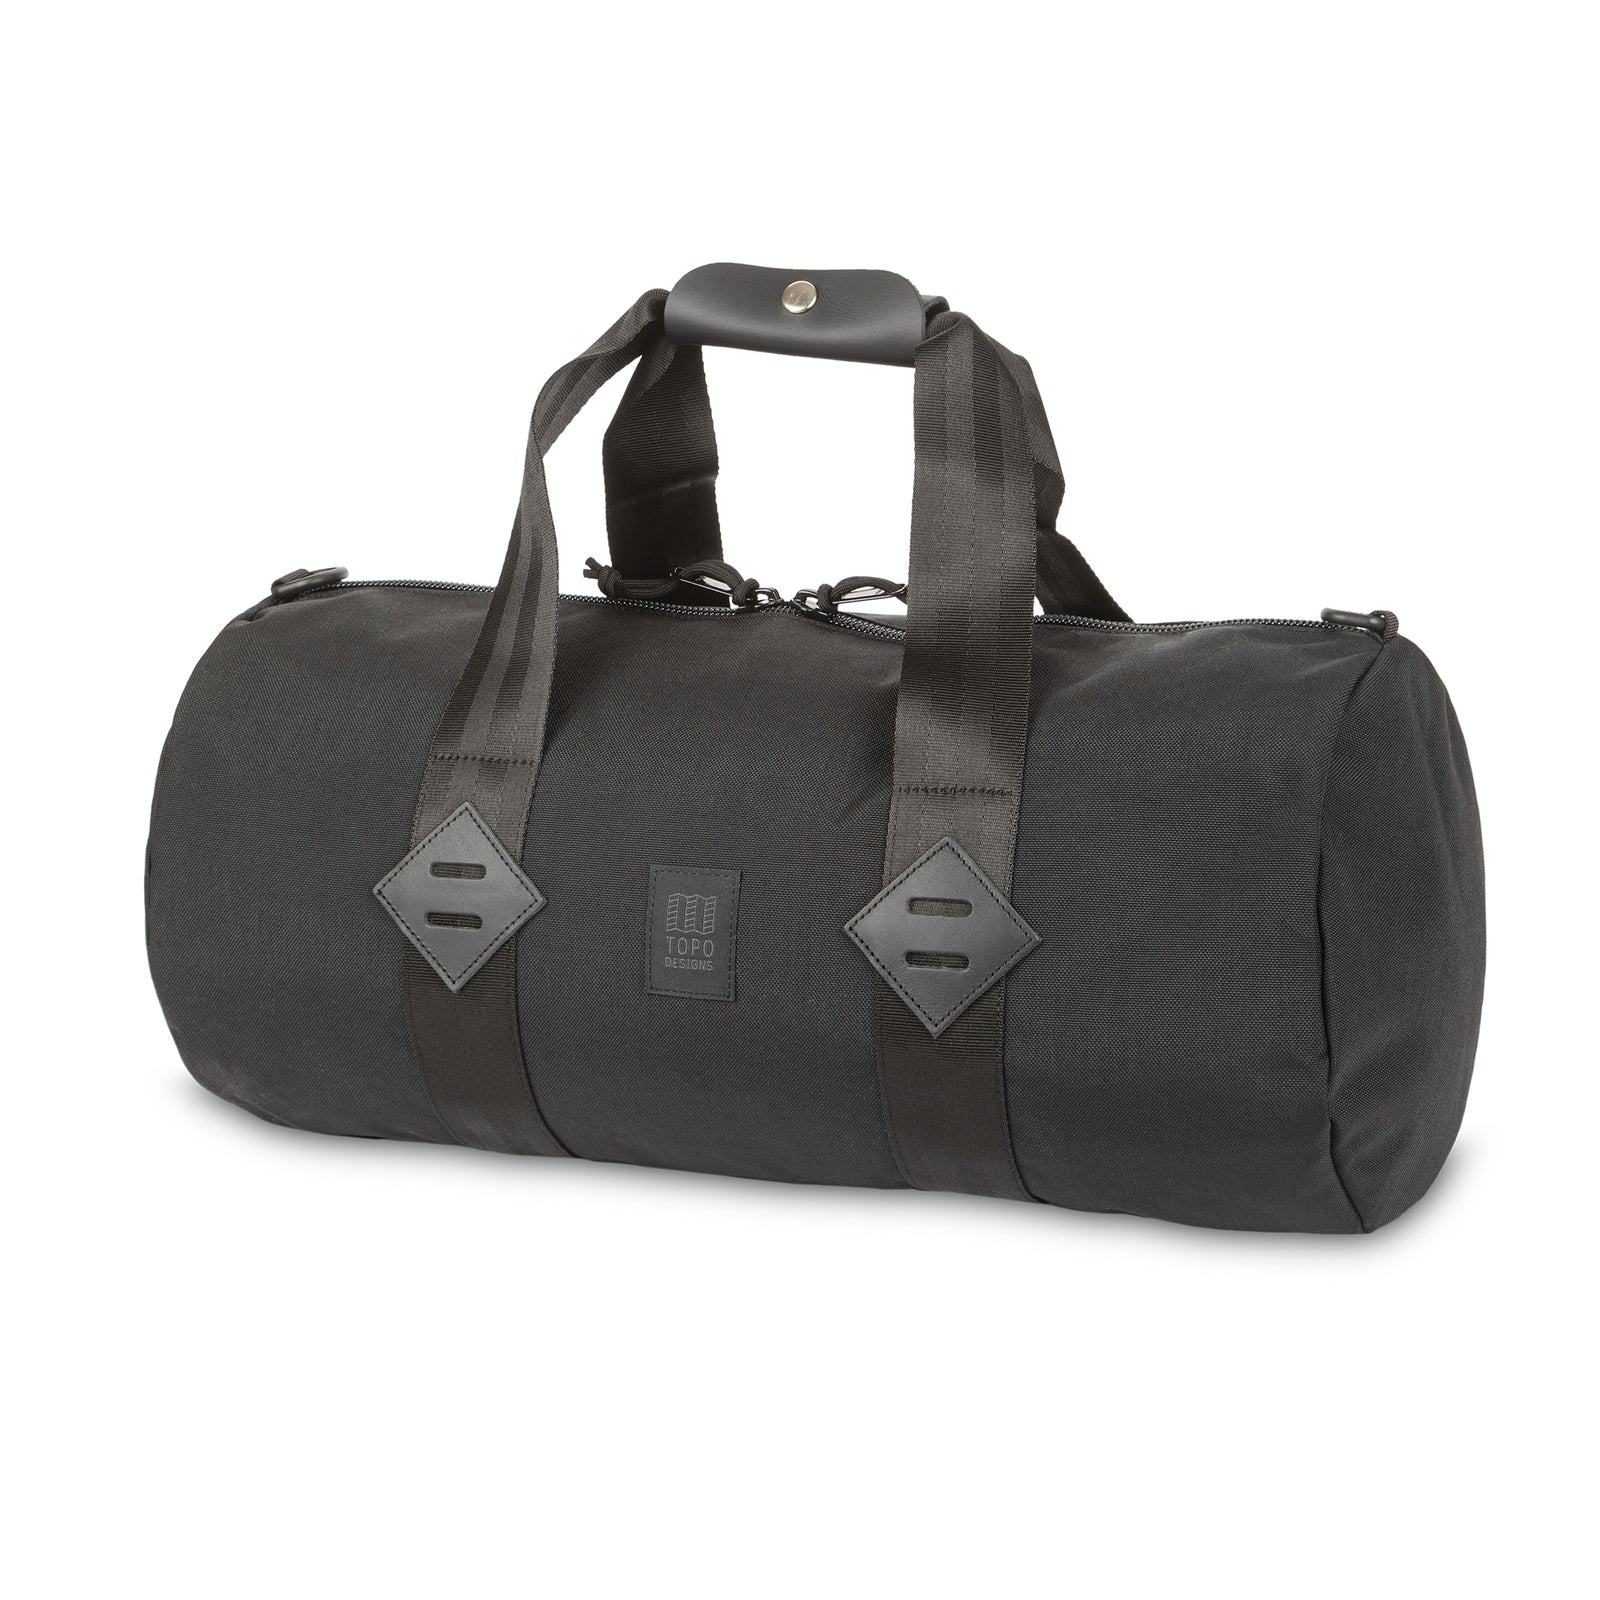 Topo Designs Classic Duffel 20" retro canvas gym bag in "Black".